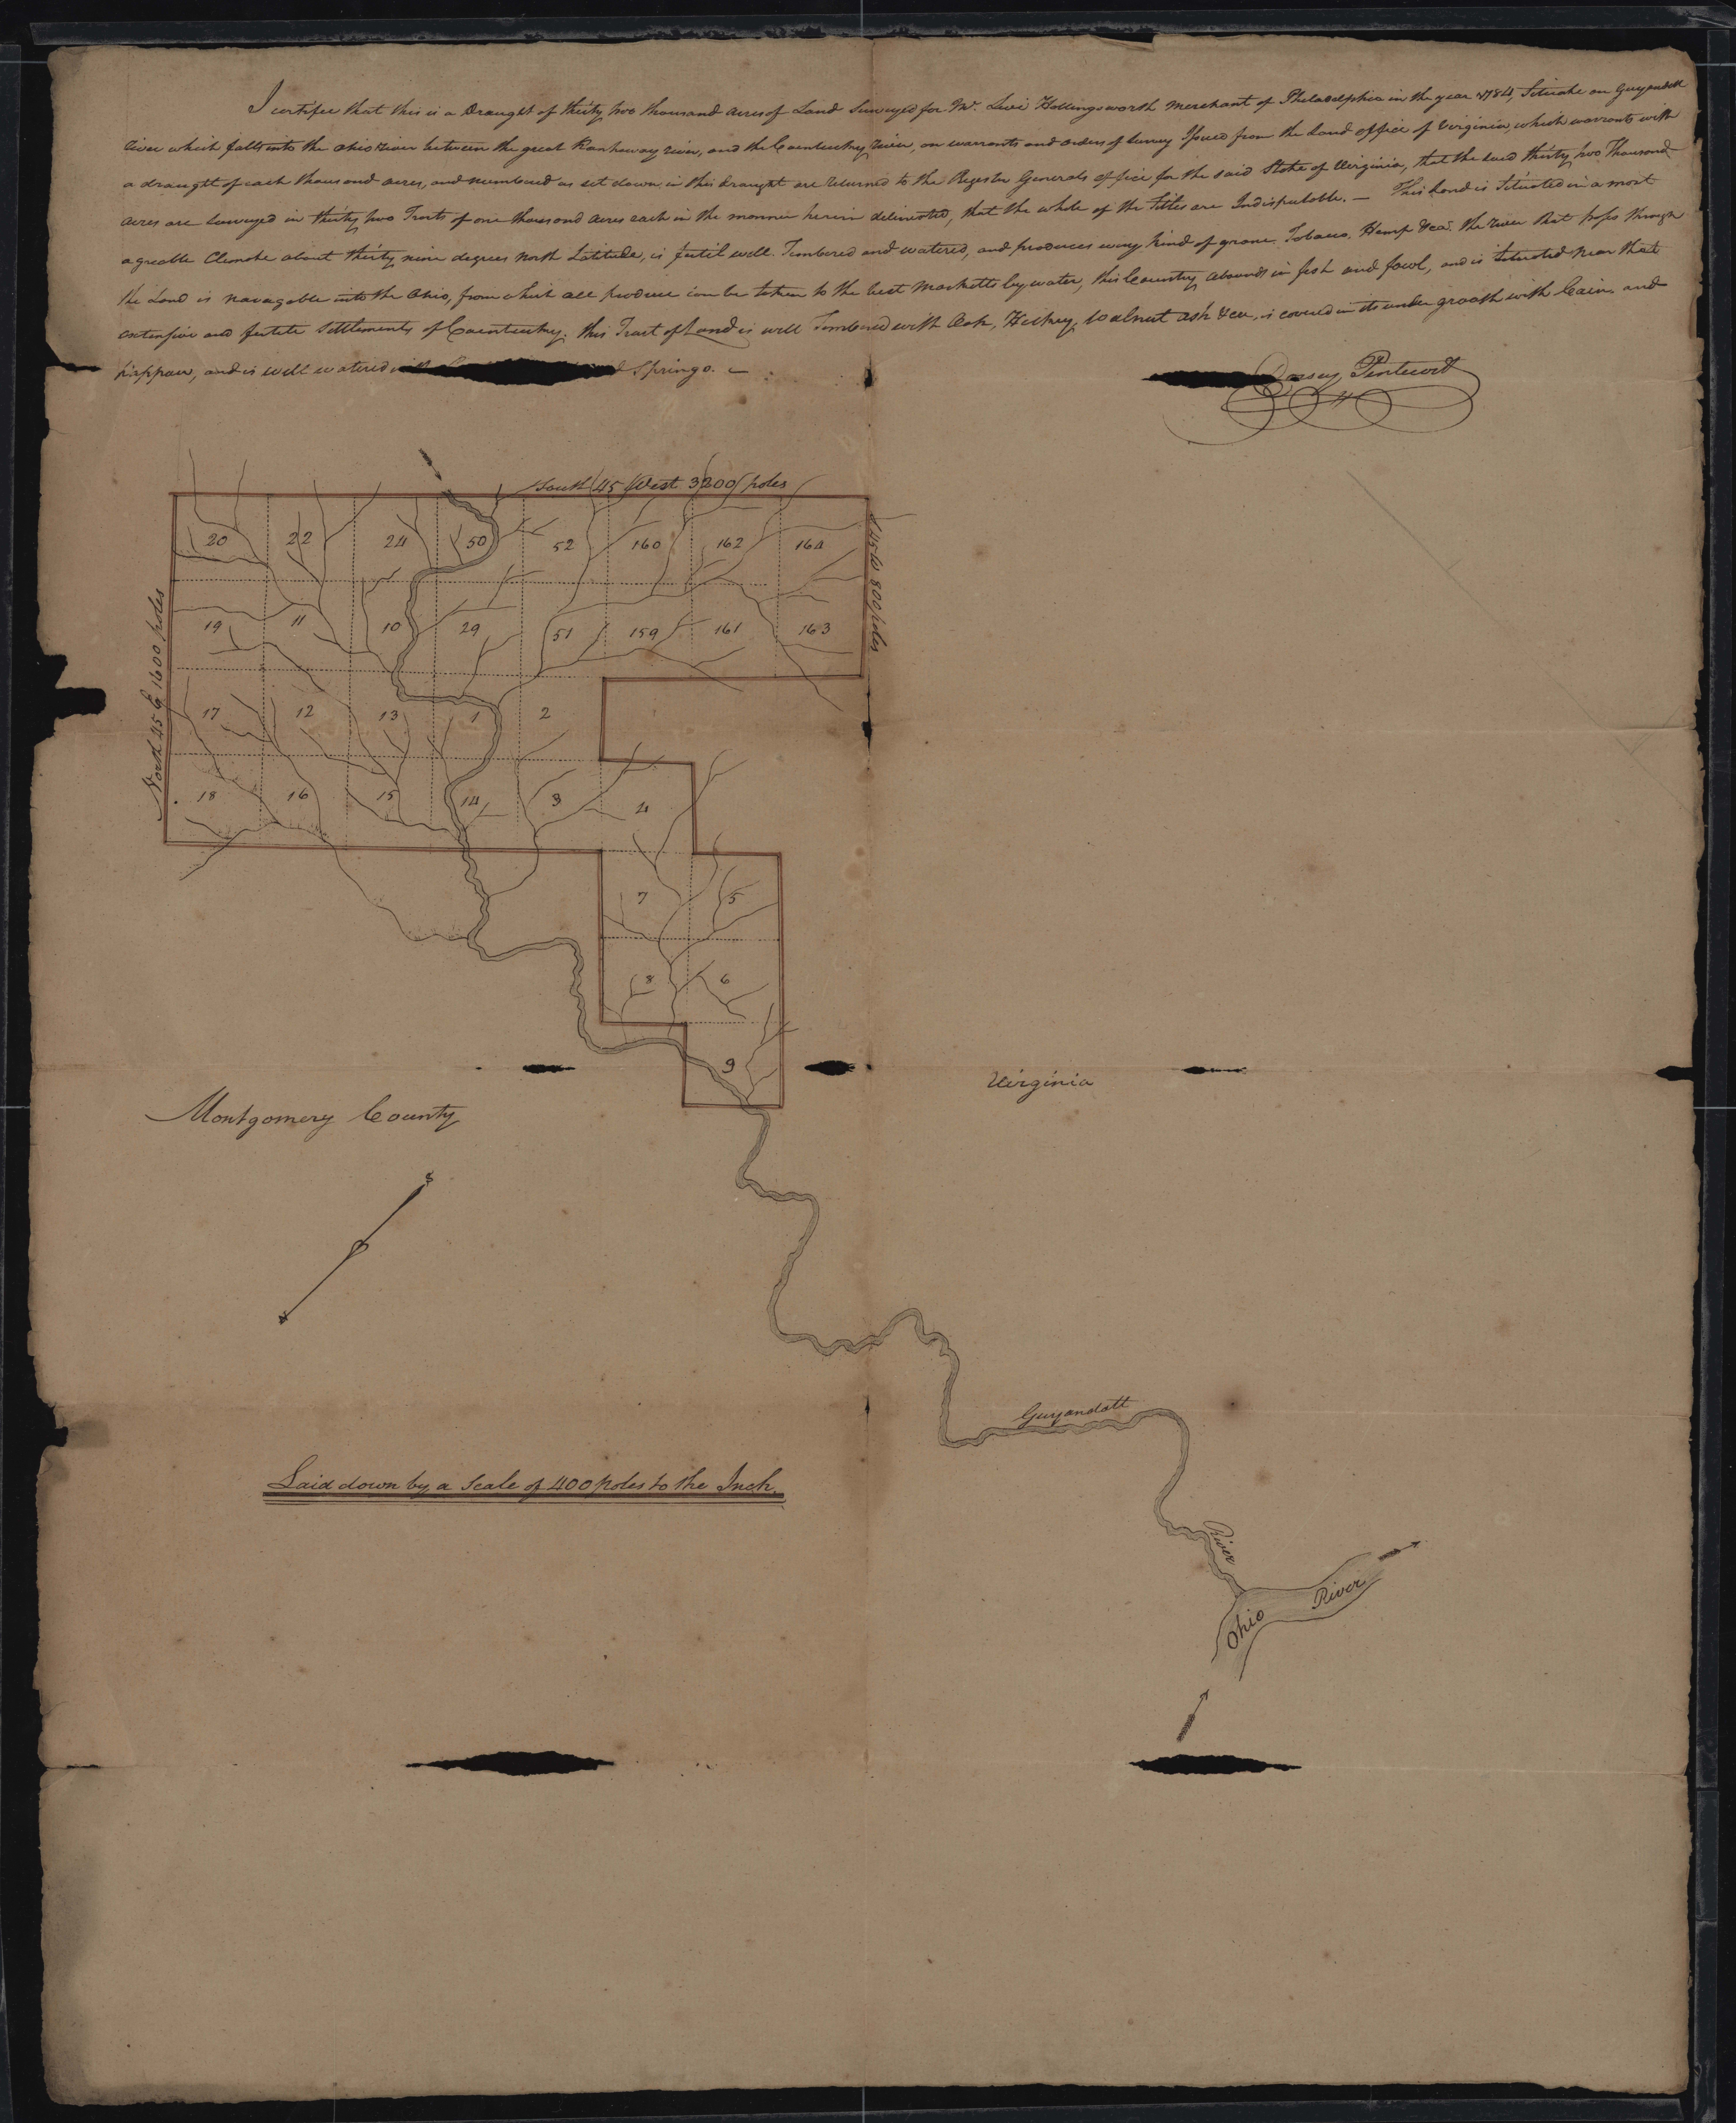 Ms2011-023, Land Survey, Montgomery County, Virginia, 1784